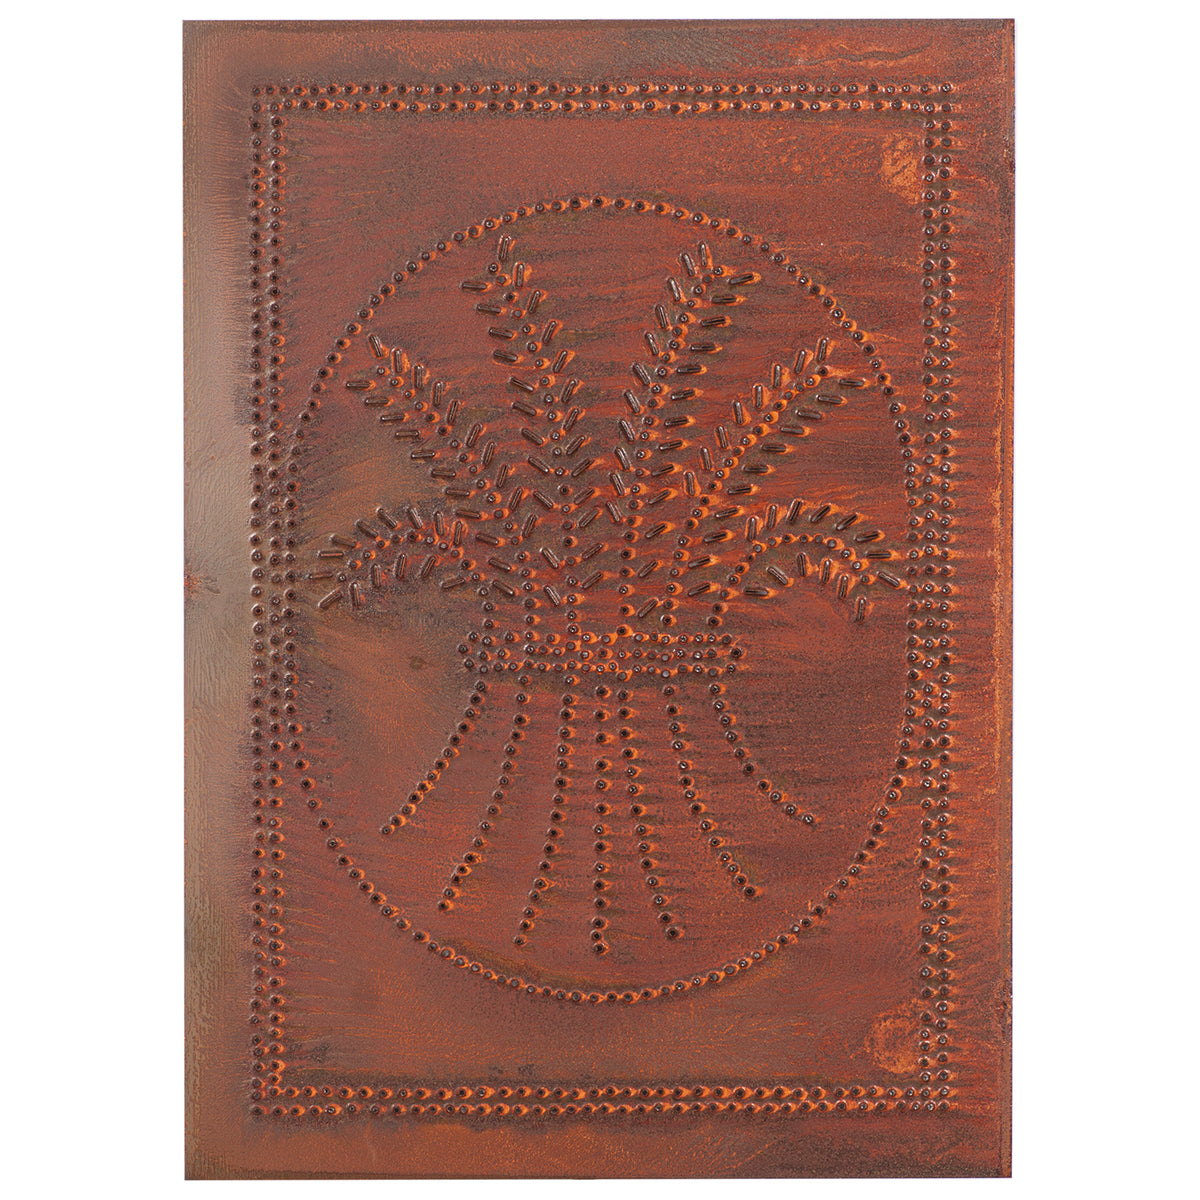 Vertical Wheat Panel in Rustic Tin